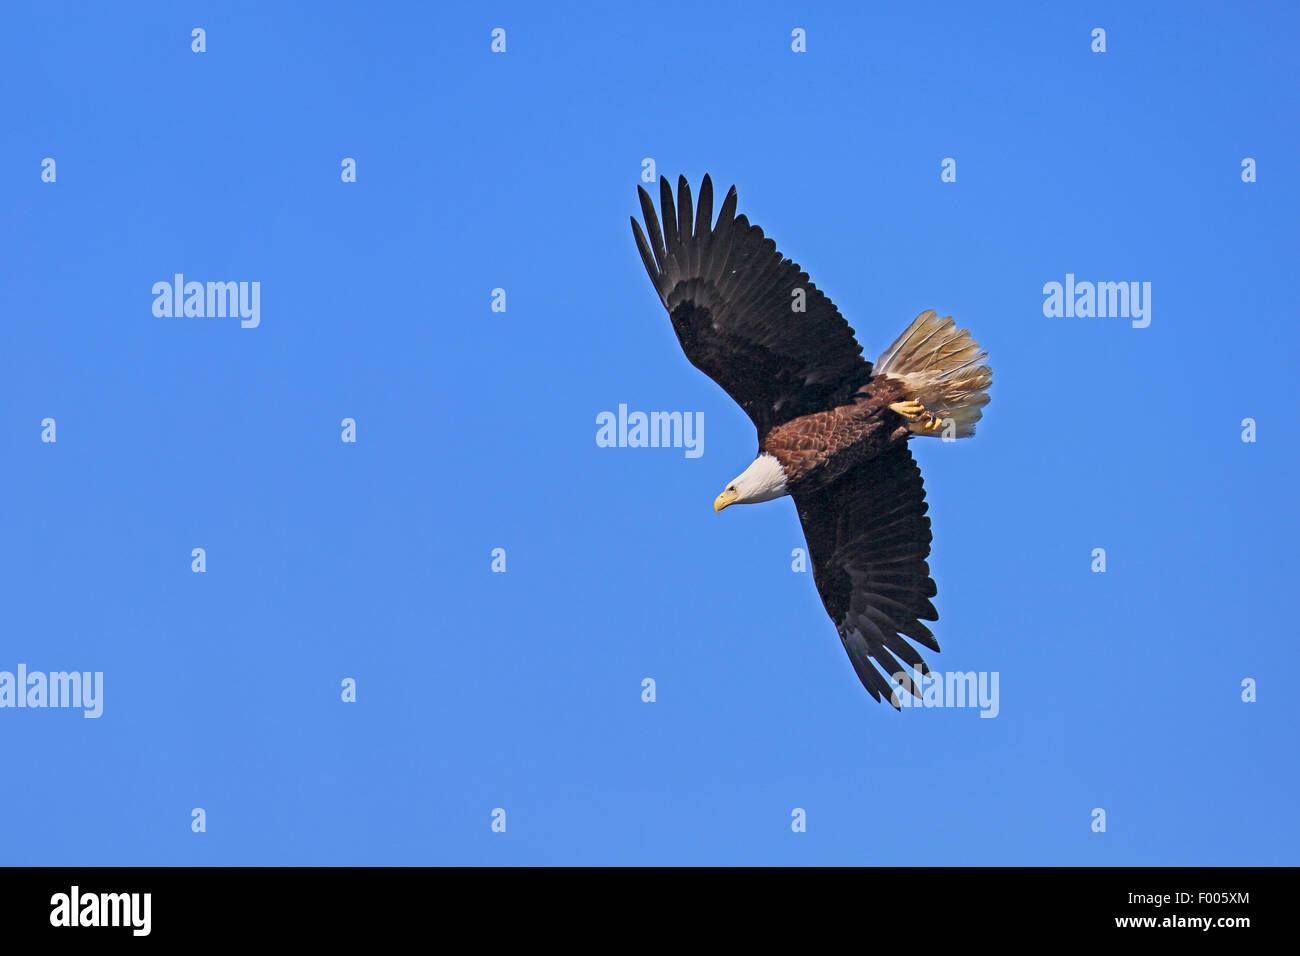 American bald eagle (Haliaeetus leucocephalus), flying at the blue sky, Canada, Vancouver Island Stock Photo